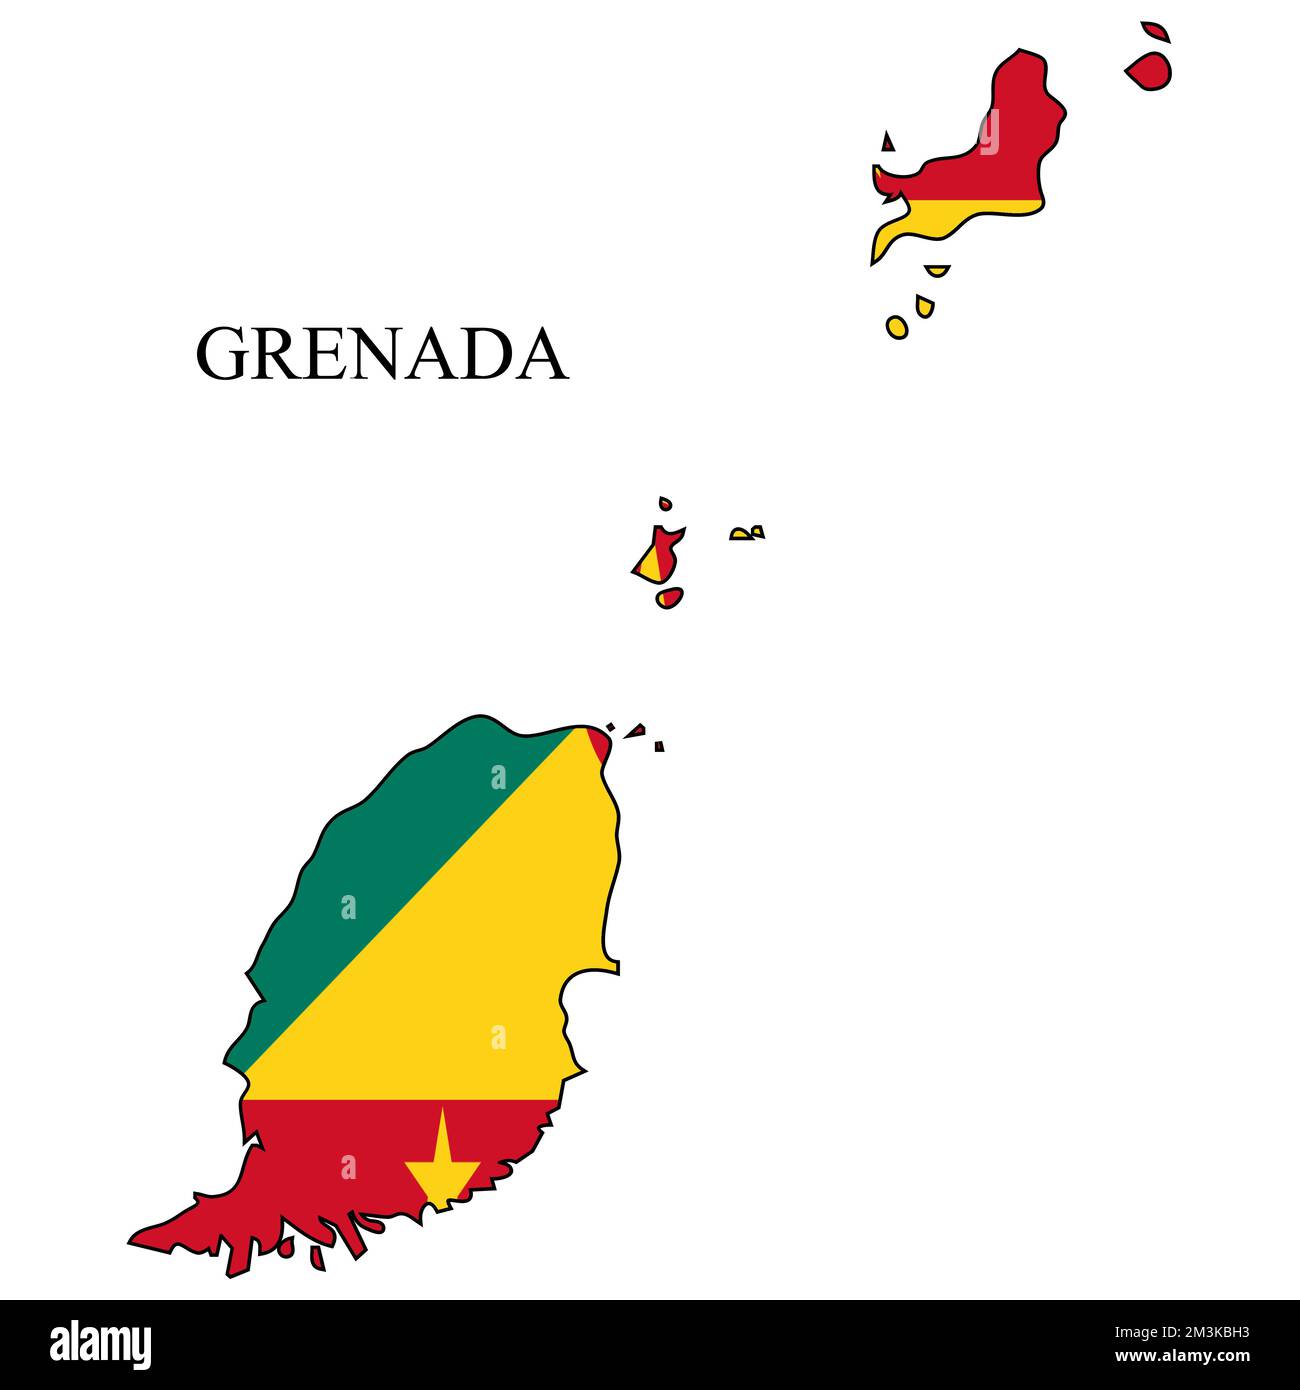 Grenada map vector illustration. Global economy. Famous country. Caribbean. Latin America. America. Stock Vector